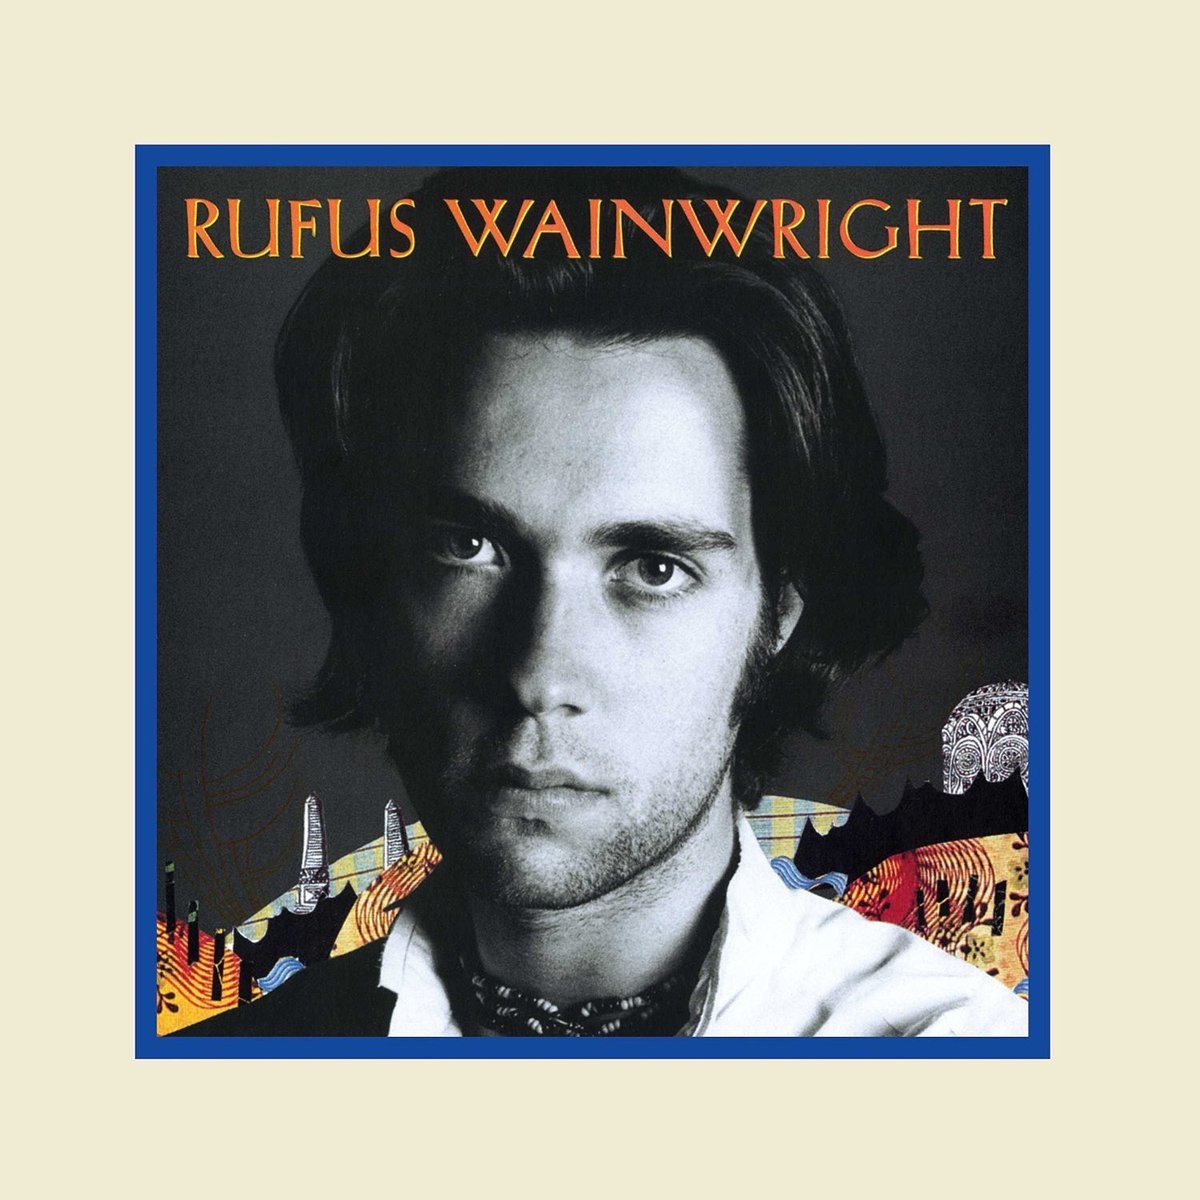 RUFUS WAINWRIGHT Postcard 1998 Tower Records Debut Album Promotional Music 